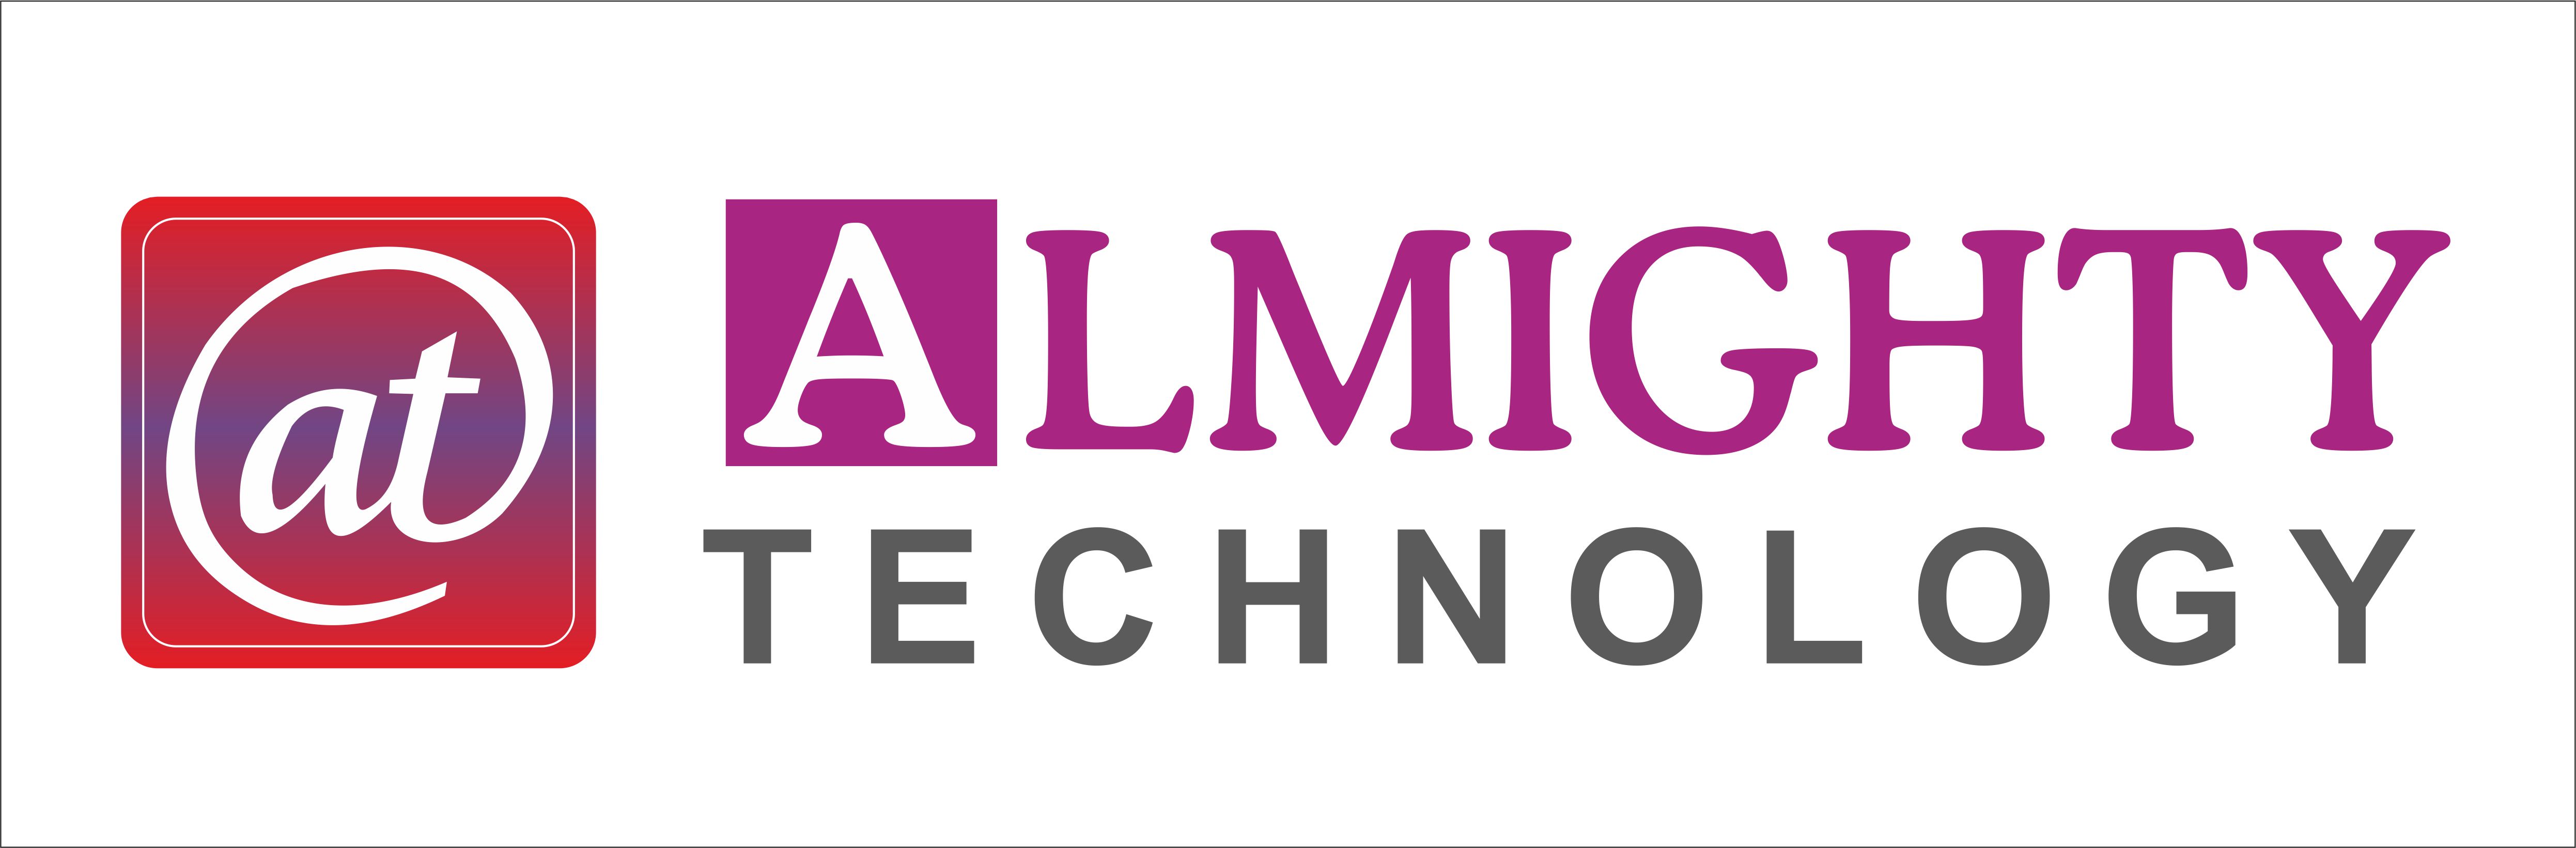 almighty_technology_logo.jpg